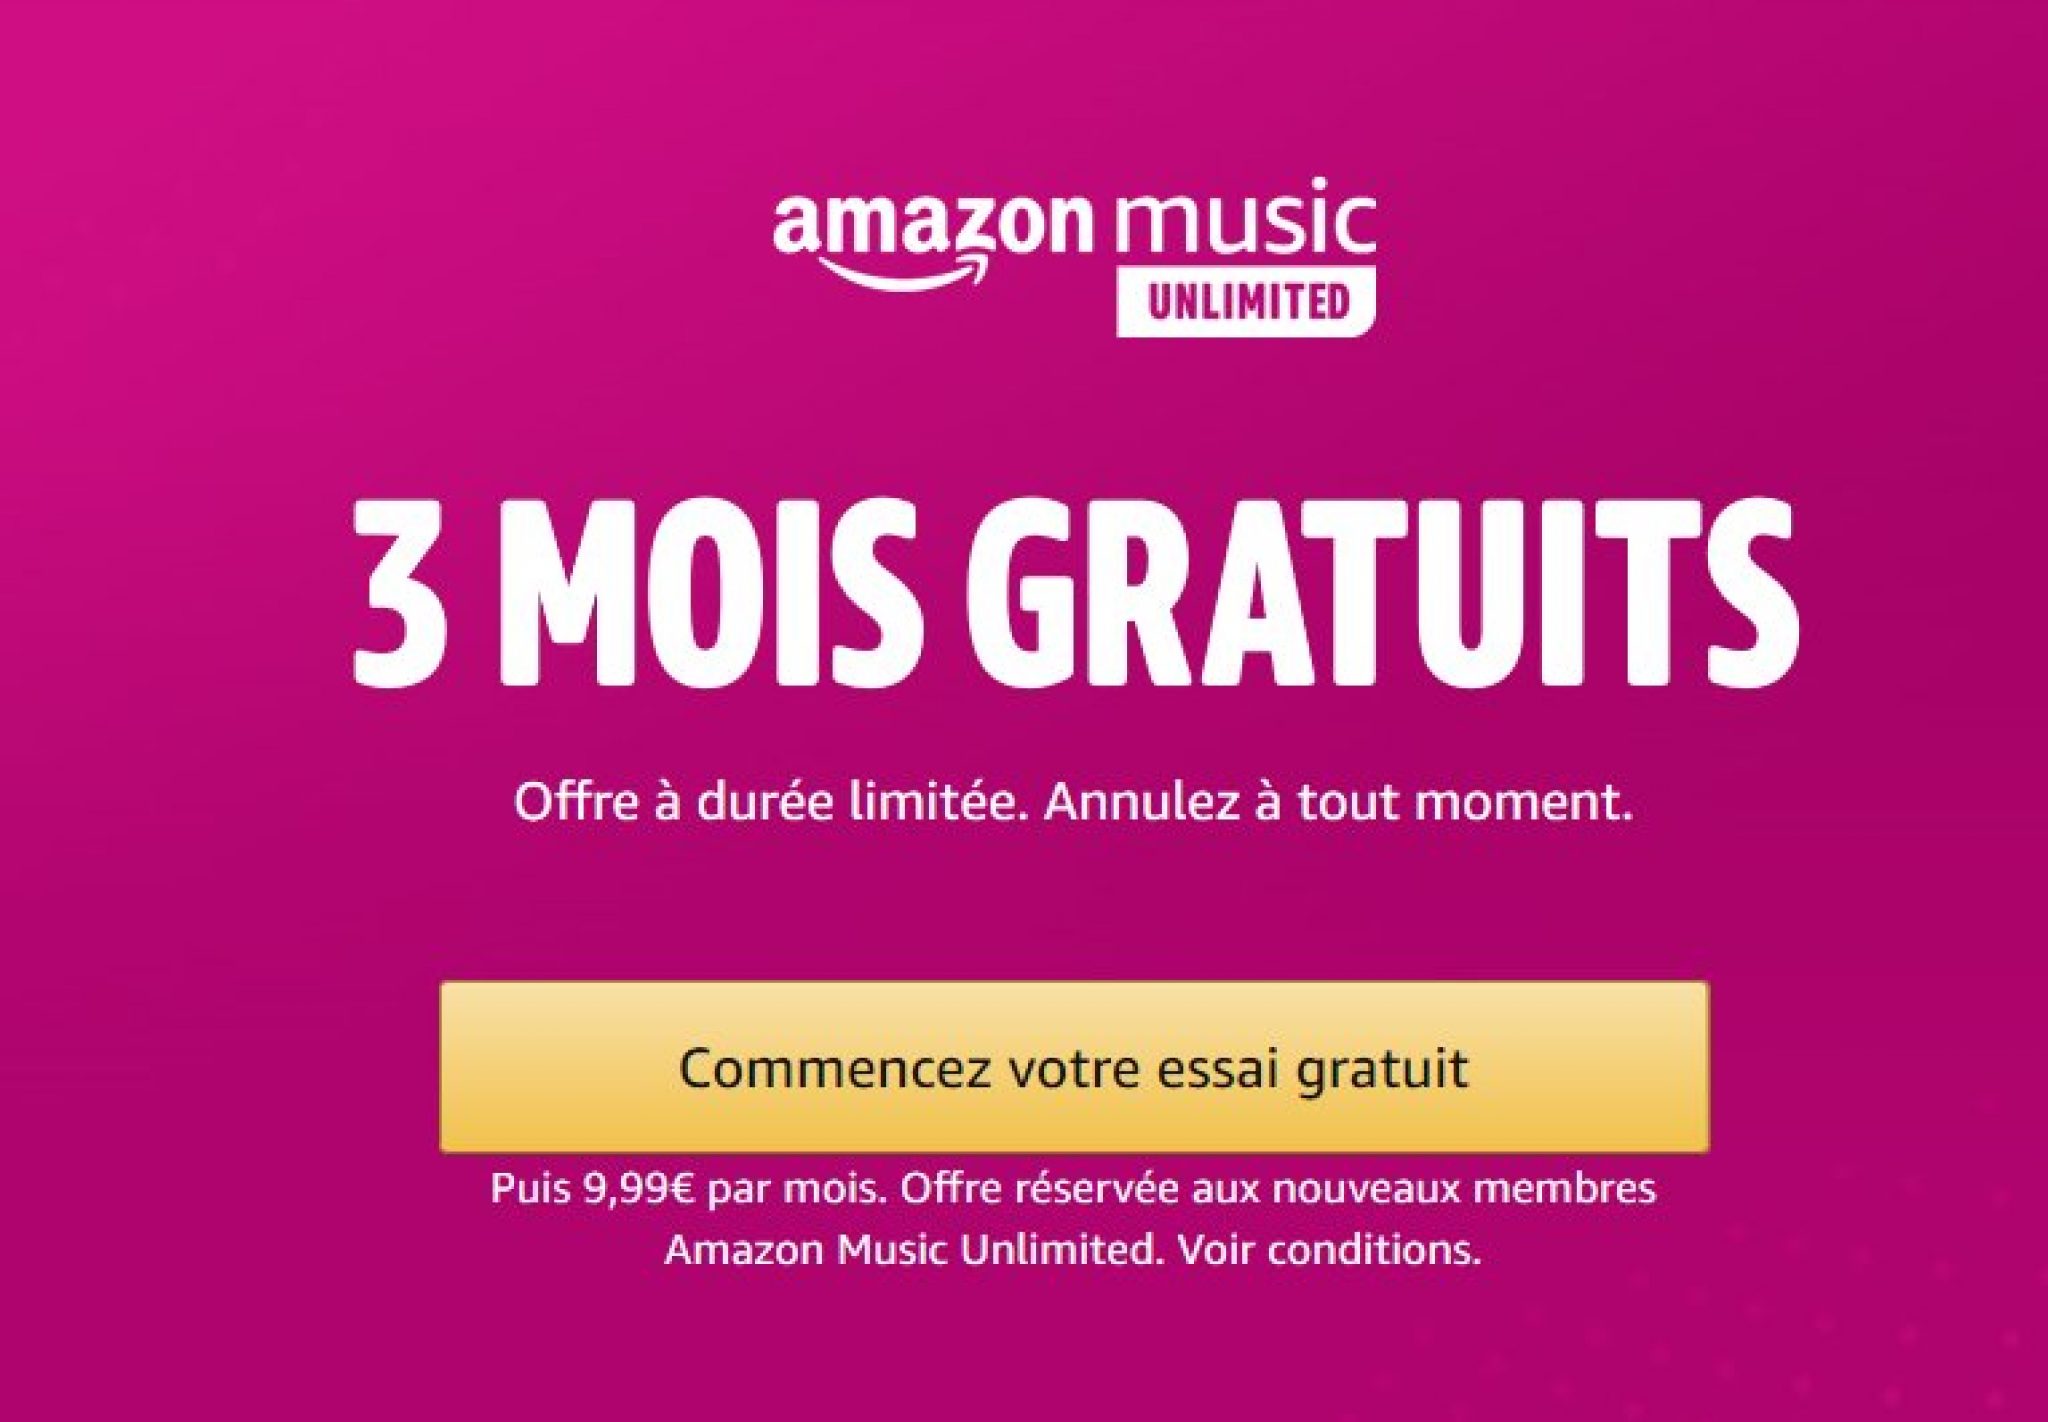 amazon music 3 months free